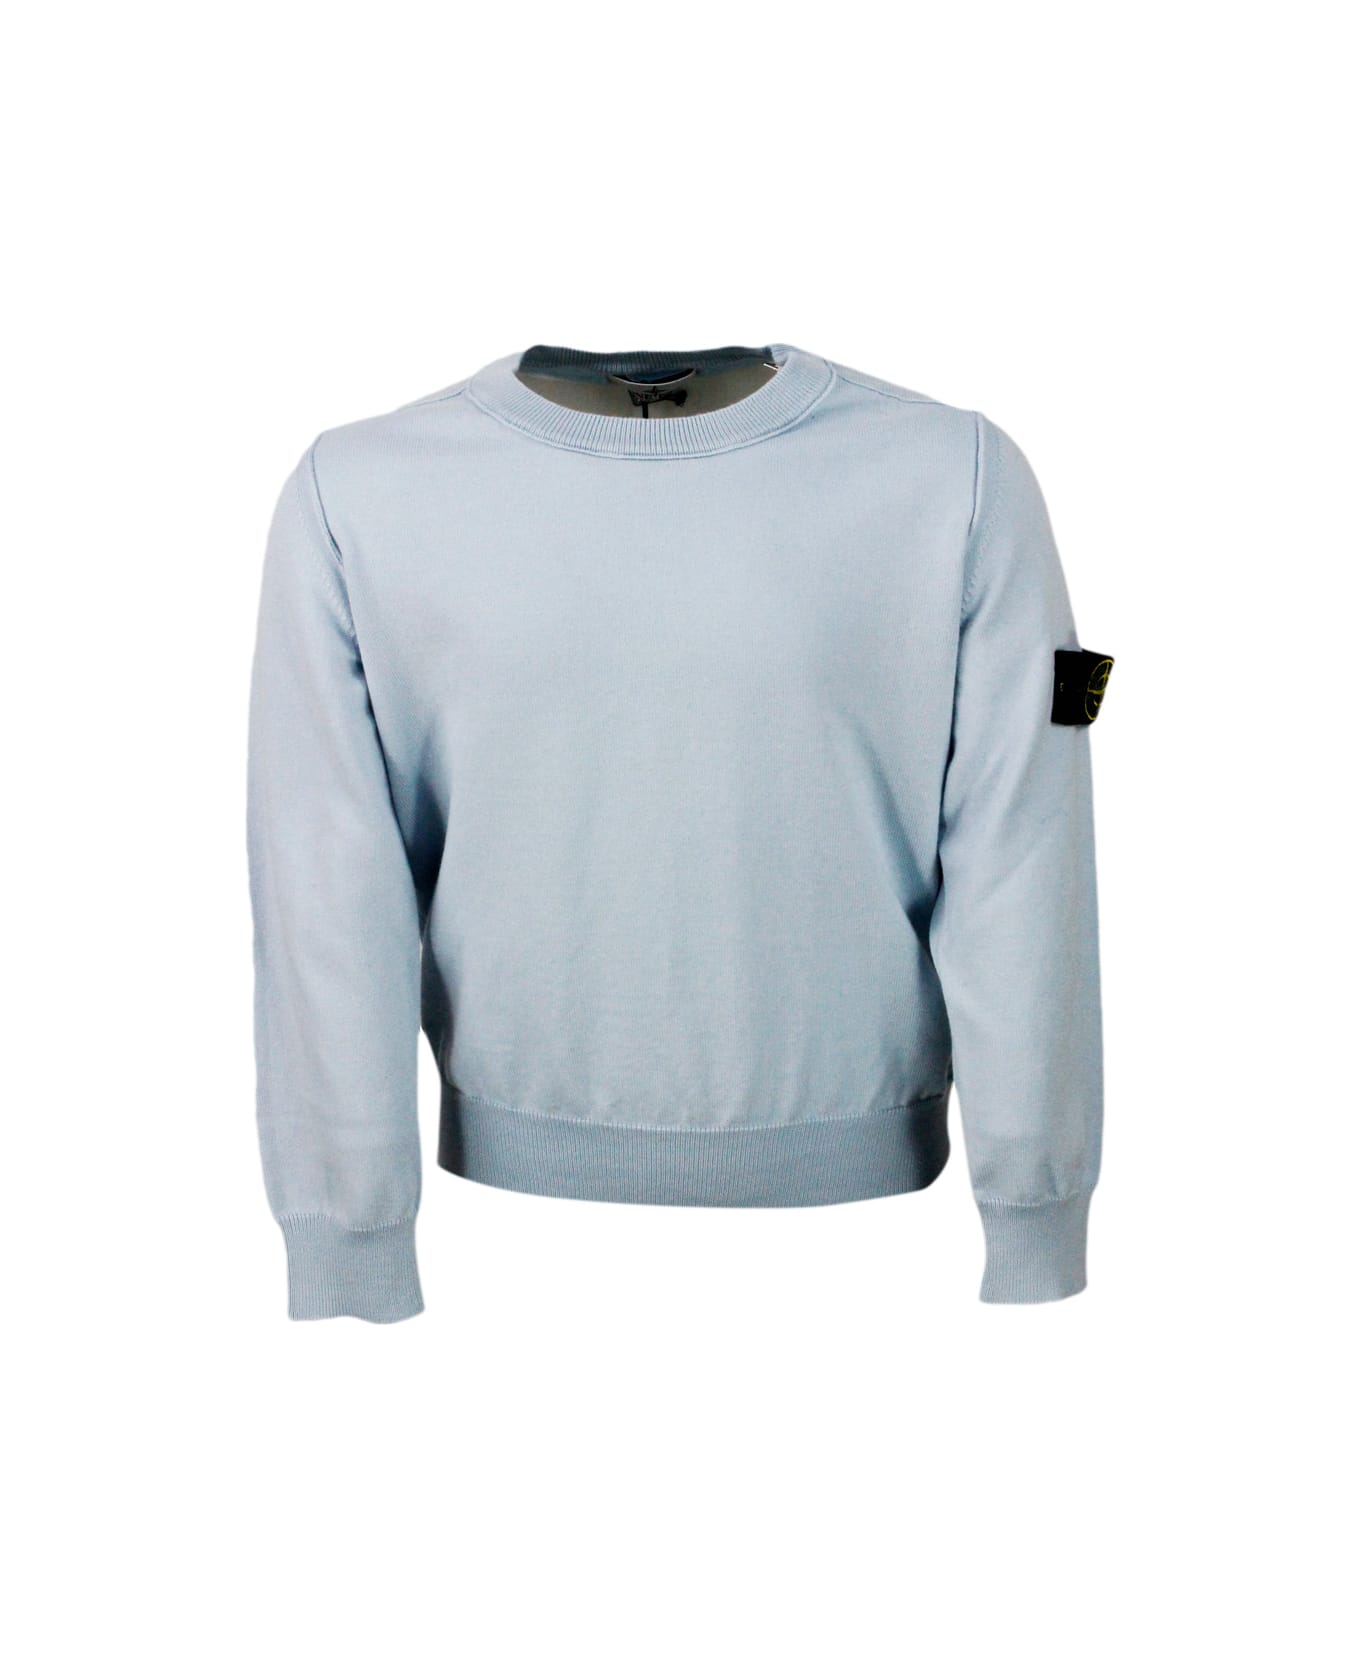 Stone Island Crew-neck, Long-sleeved Cotton Sweater With Raised Stitching - Light Blu ニットウェア＆スウェットシャツ